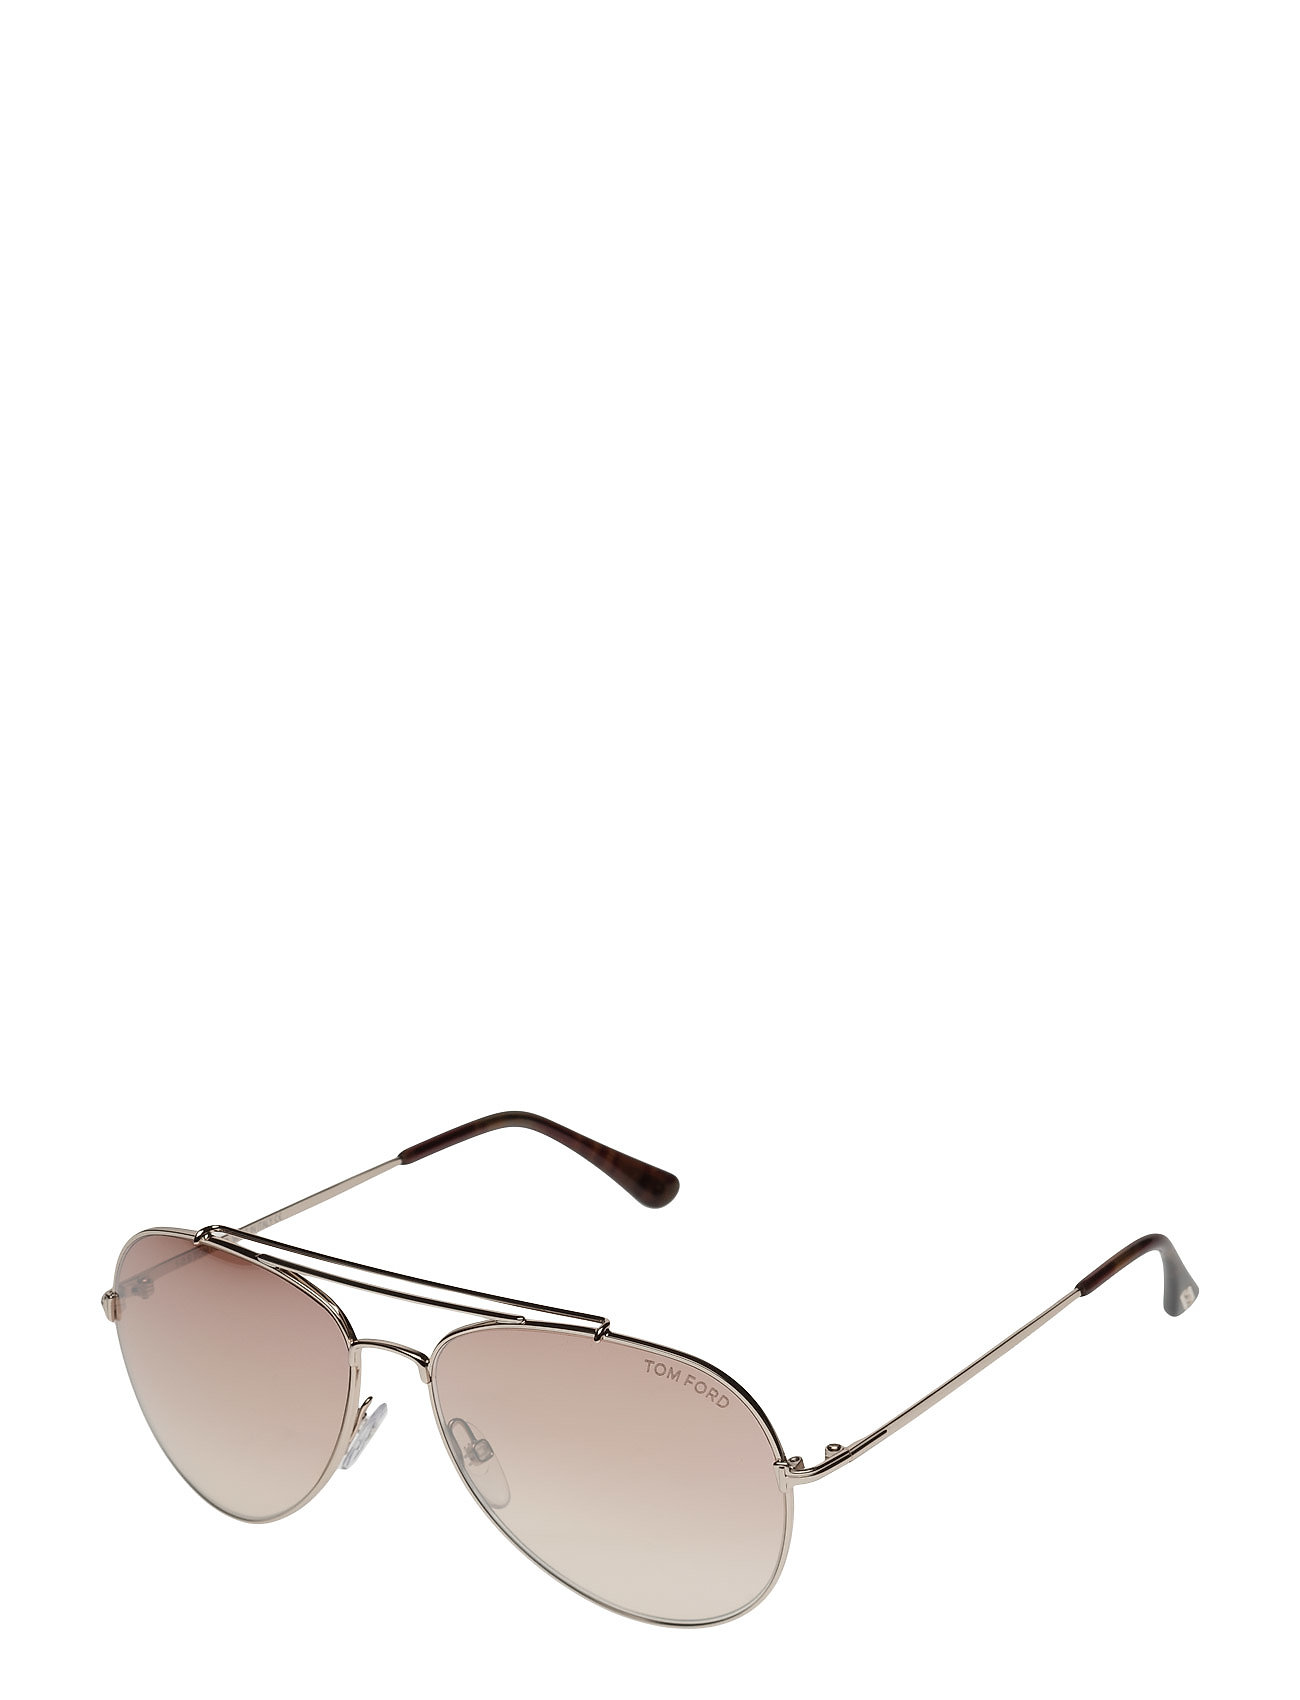 trug brydning Revisor Guld Tom Ford Sunglasses Tom Ford Indiana aviator solbriller for dame -  Pashion.dk